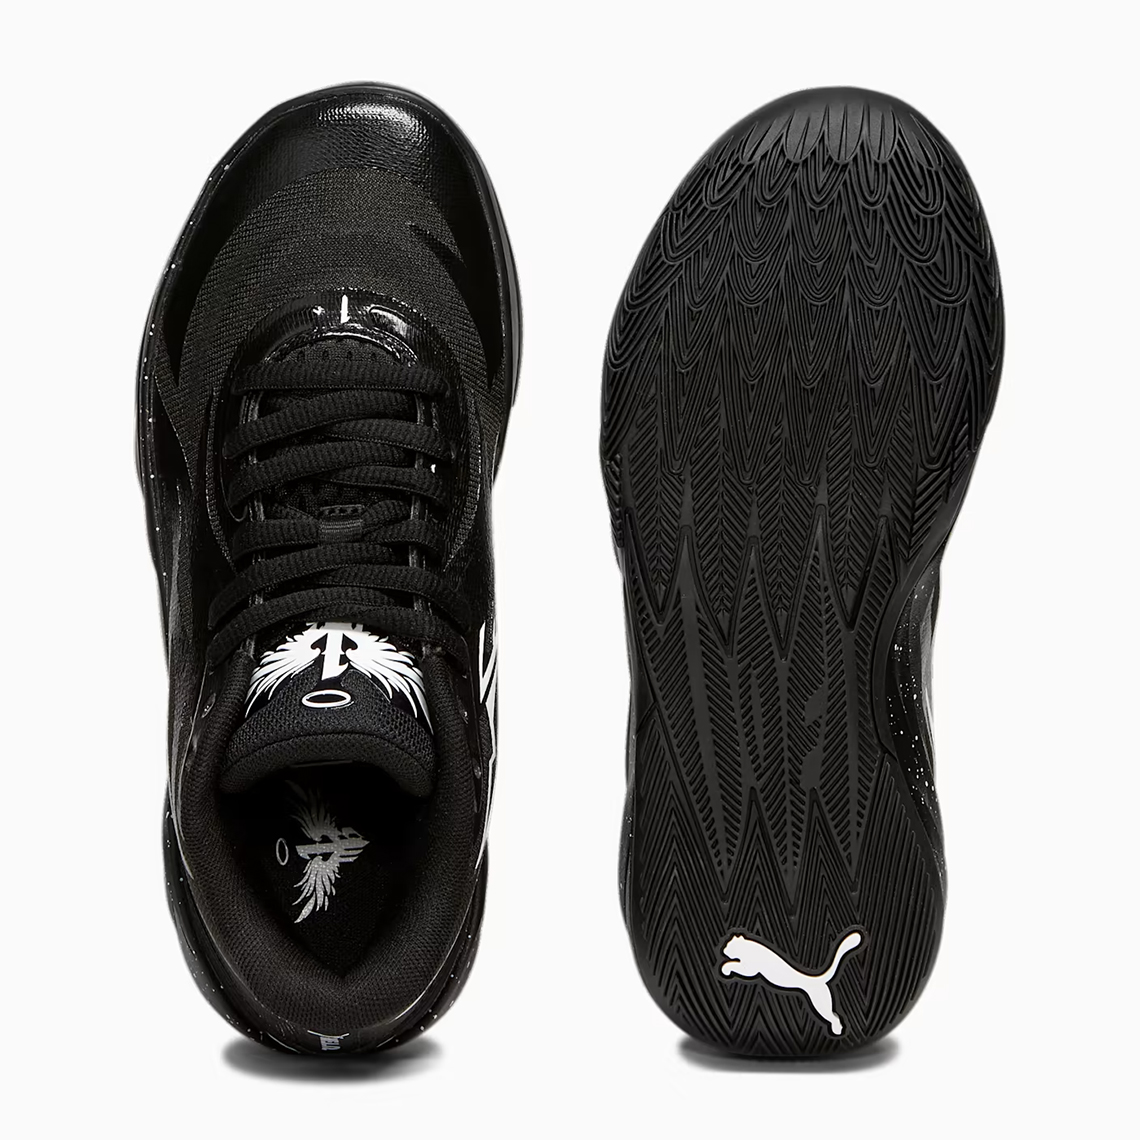 Puma Men's LaMelo Ball MB.02 Black/White Oreo Basketball Shoe